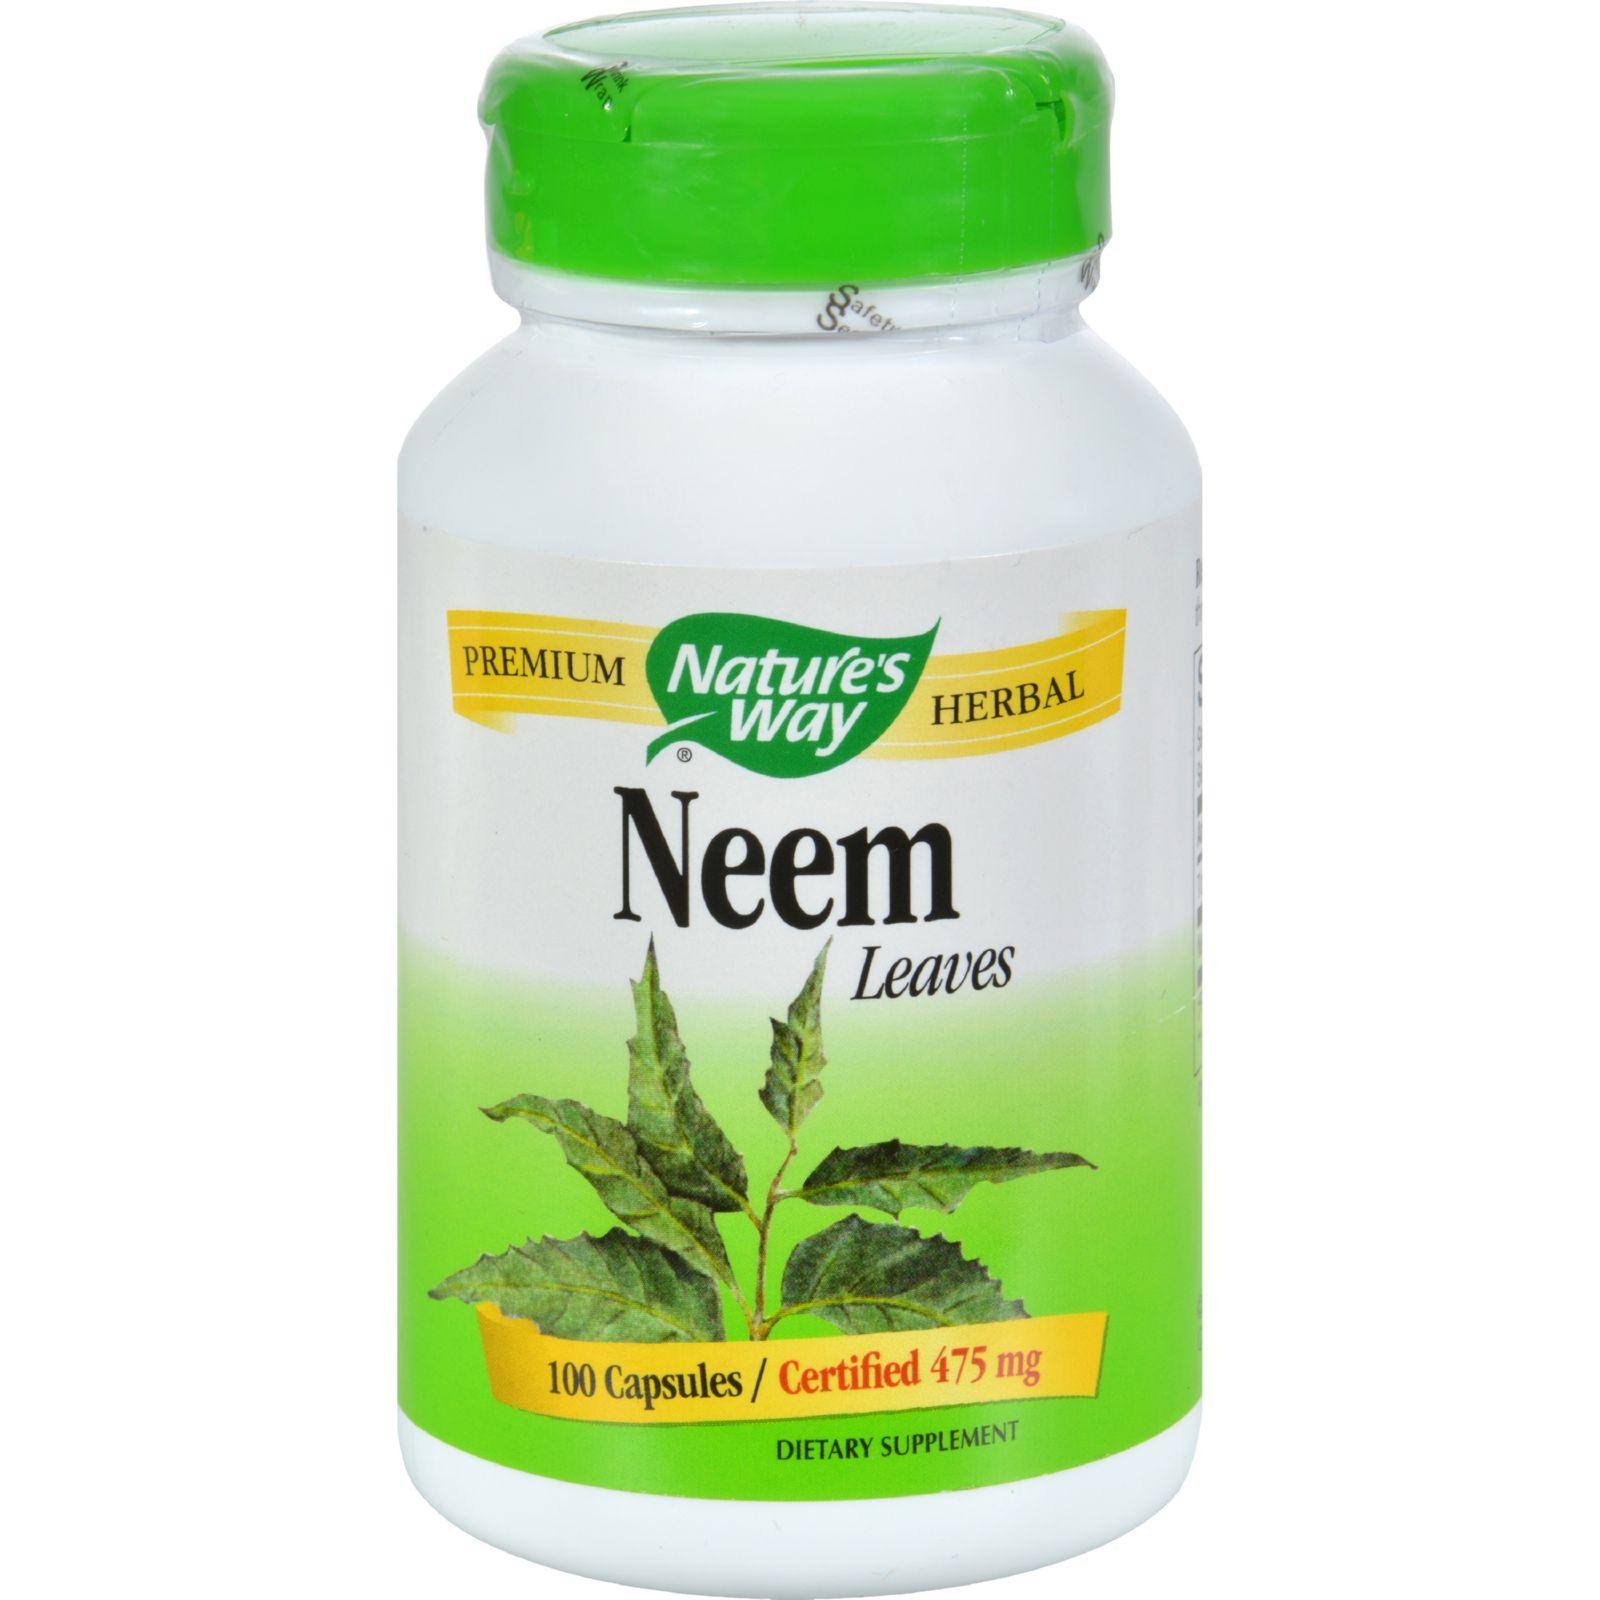 Nature's Way Neem Leaves - 475 mg, 100 Capsules